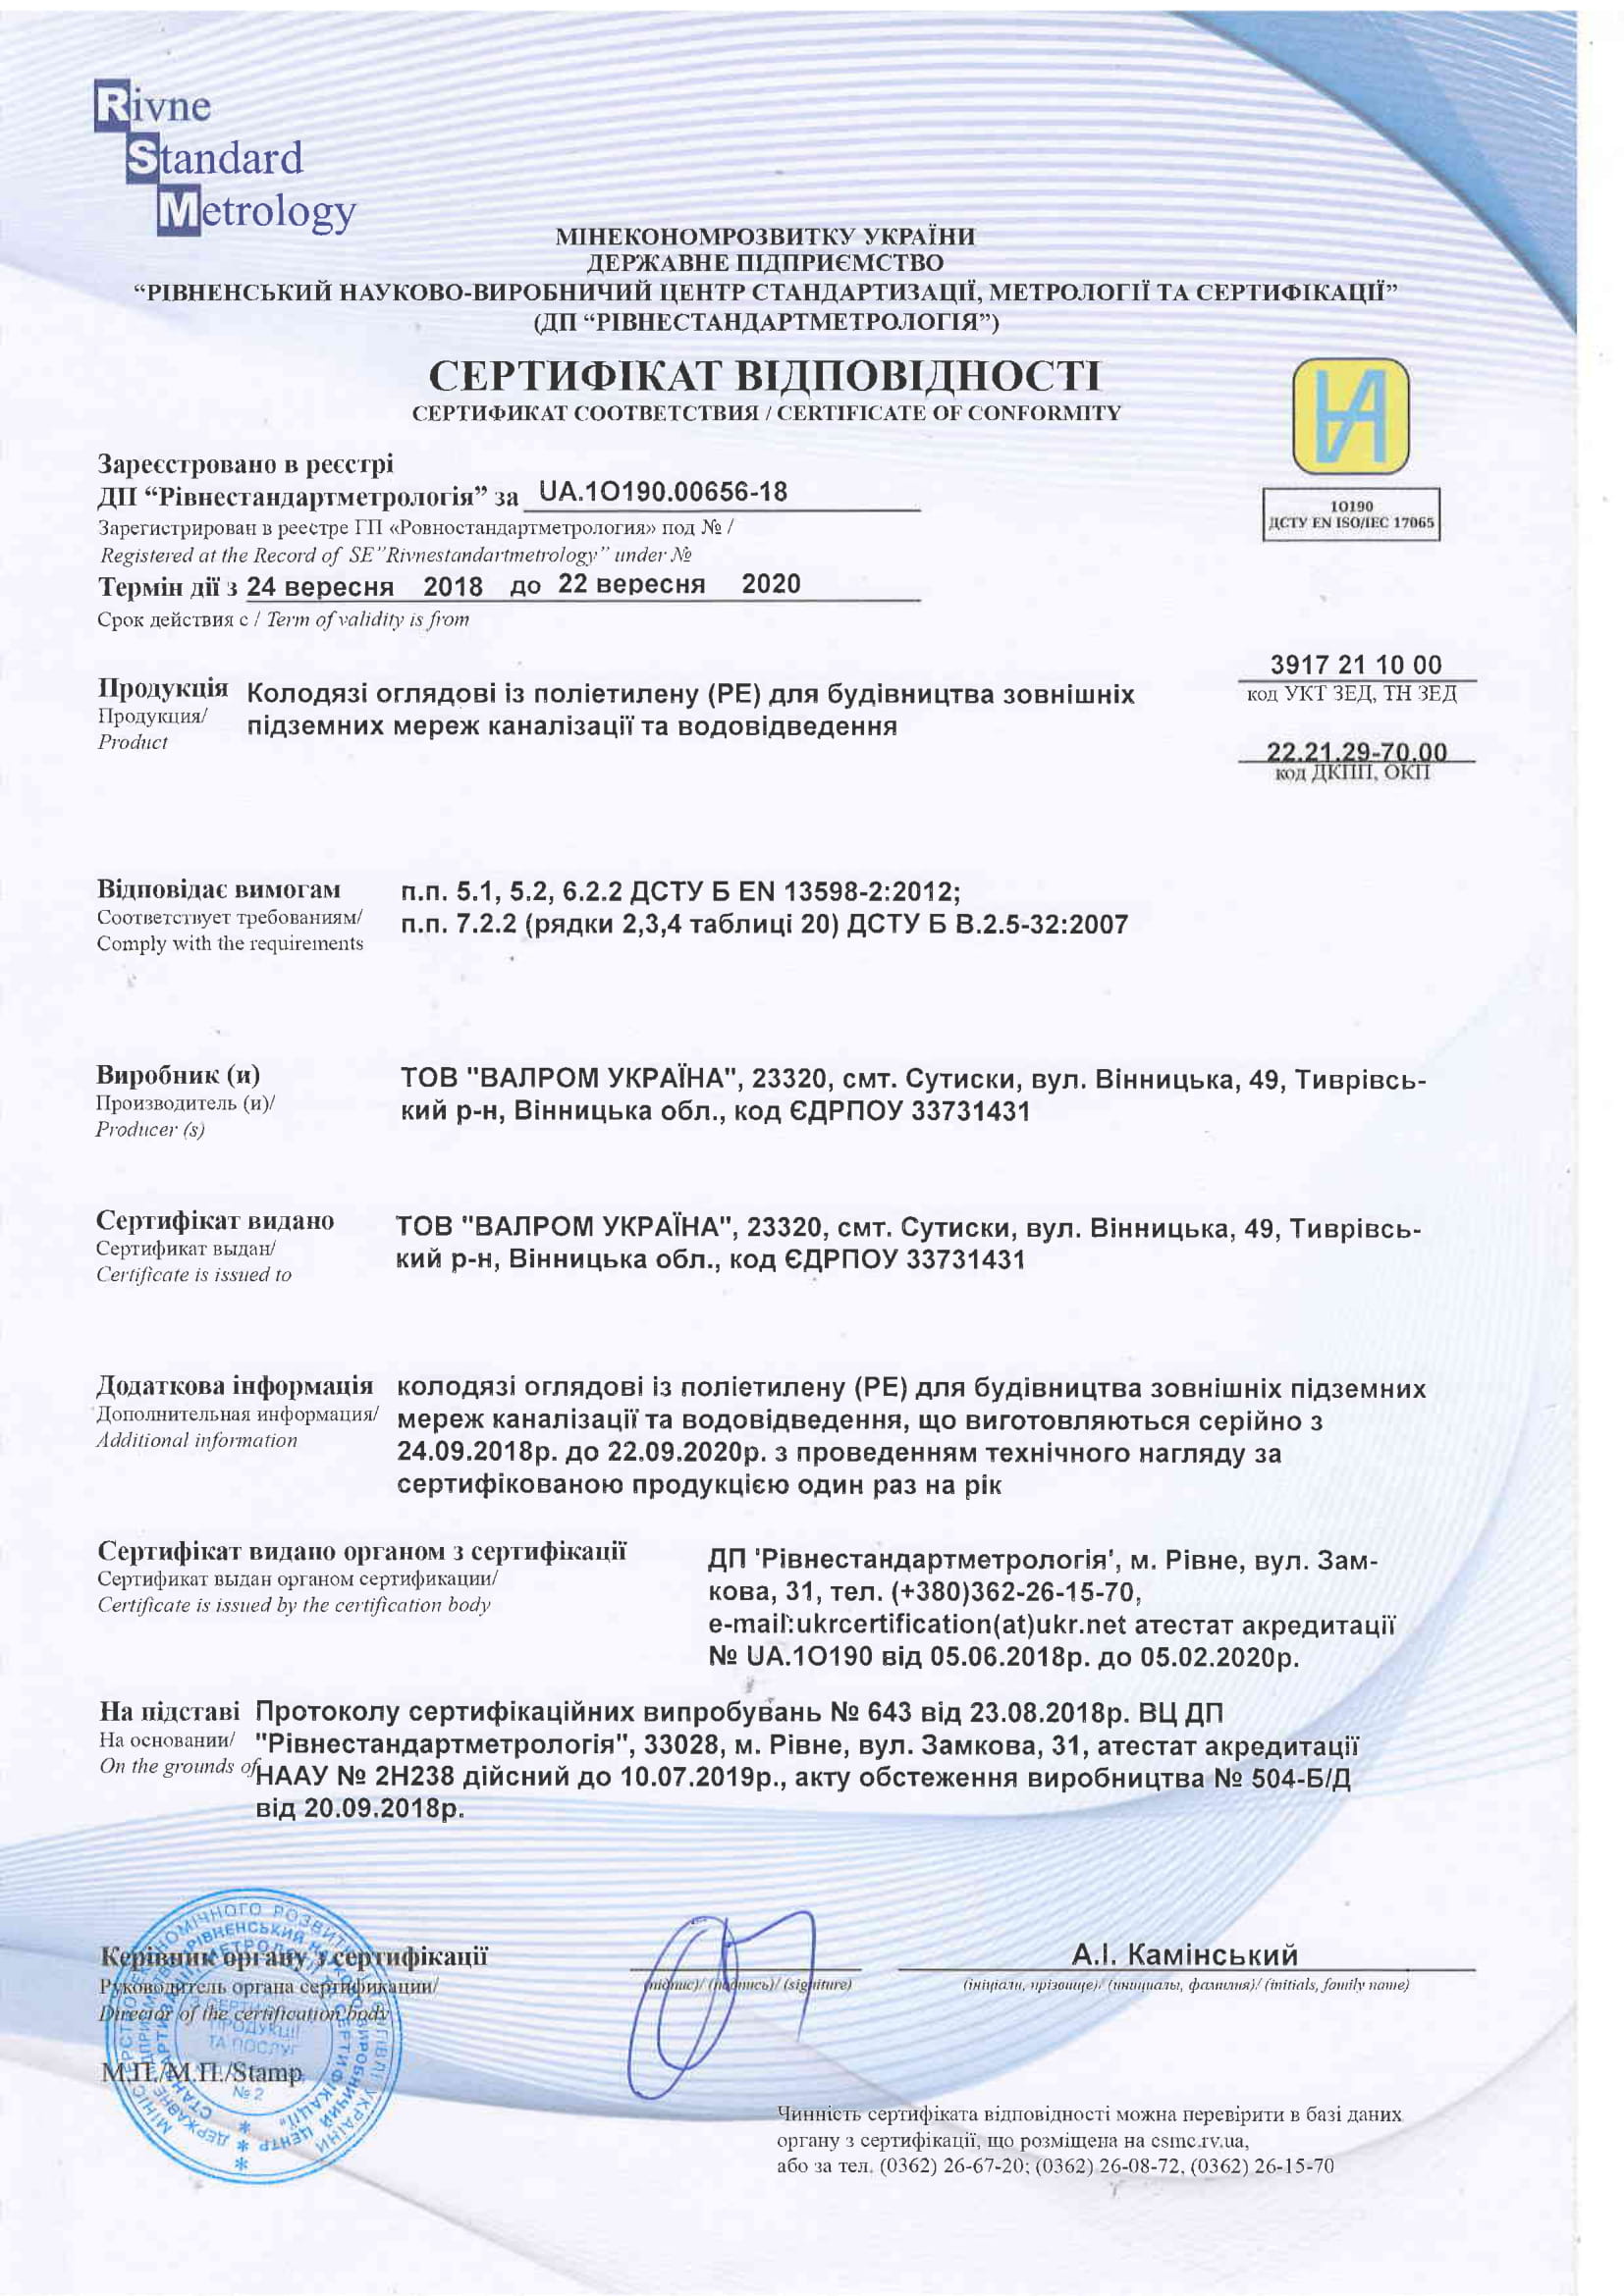 22.09.2020 kolodyaz' sertifikat